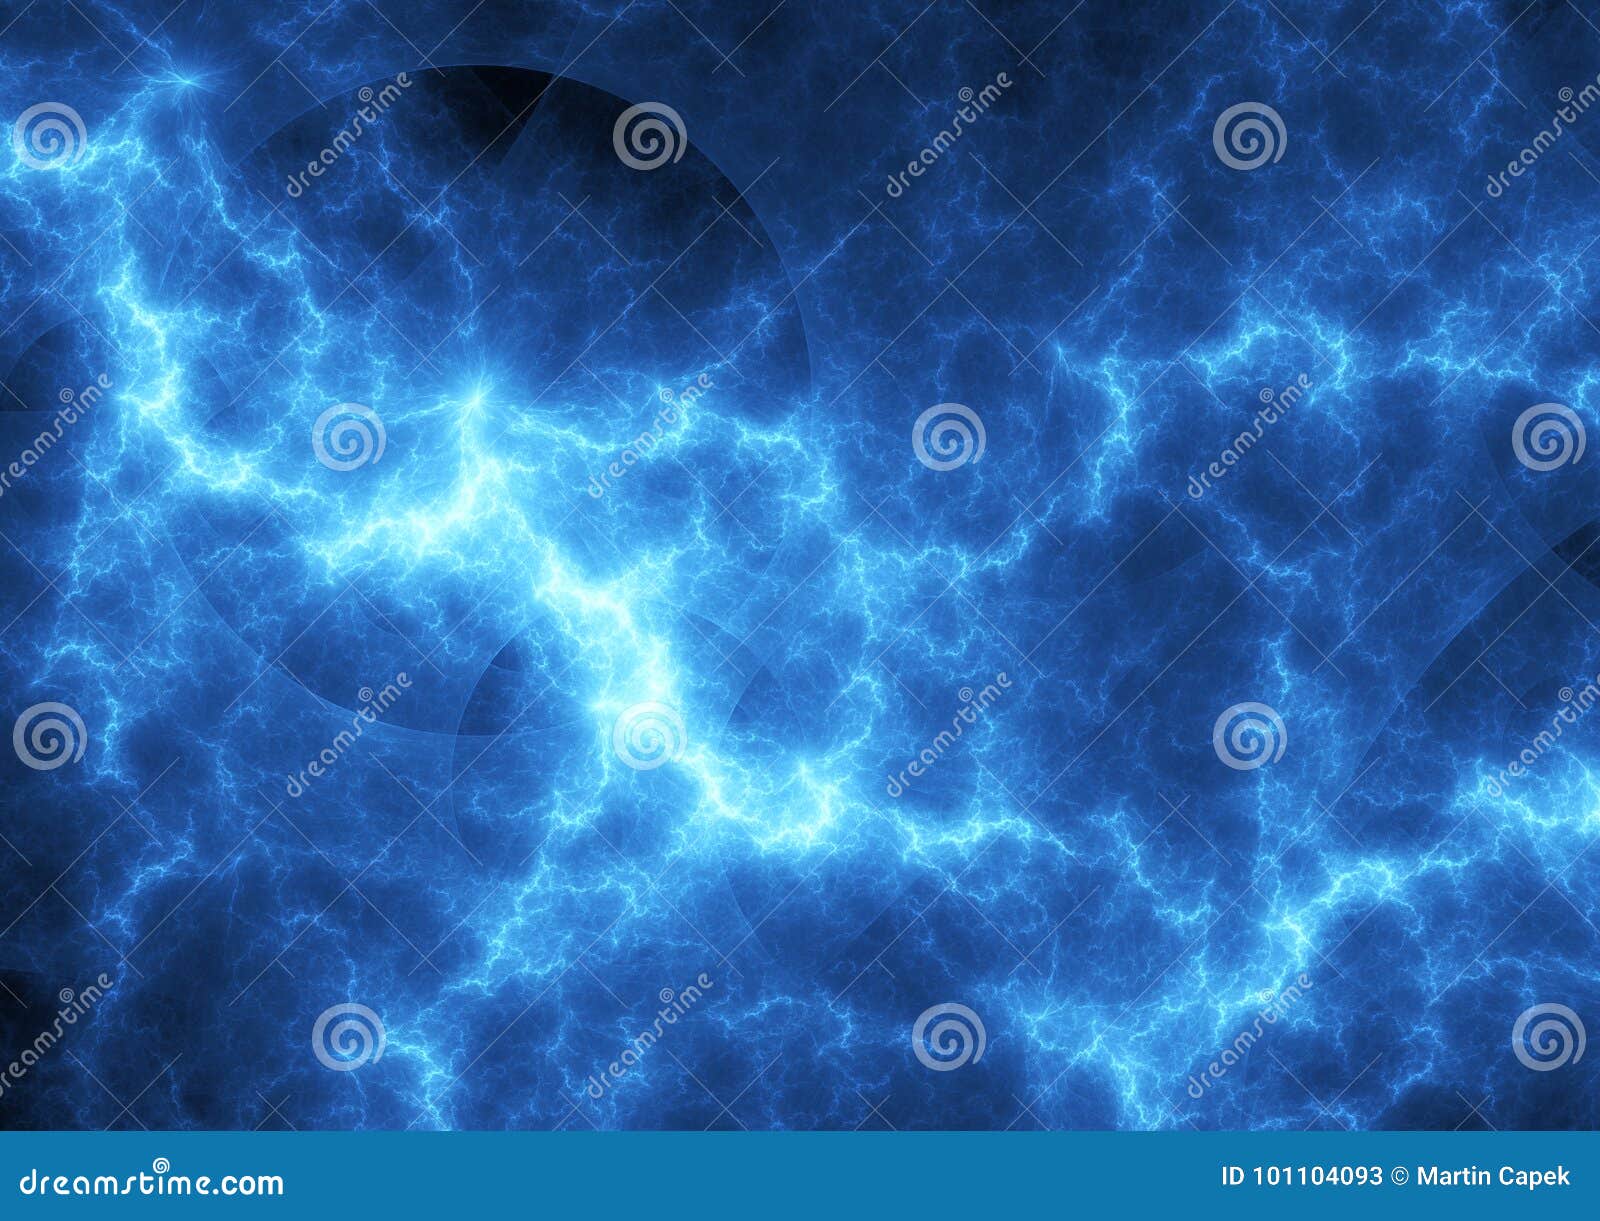 Blue lightning background stock illustration. Illustration of